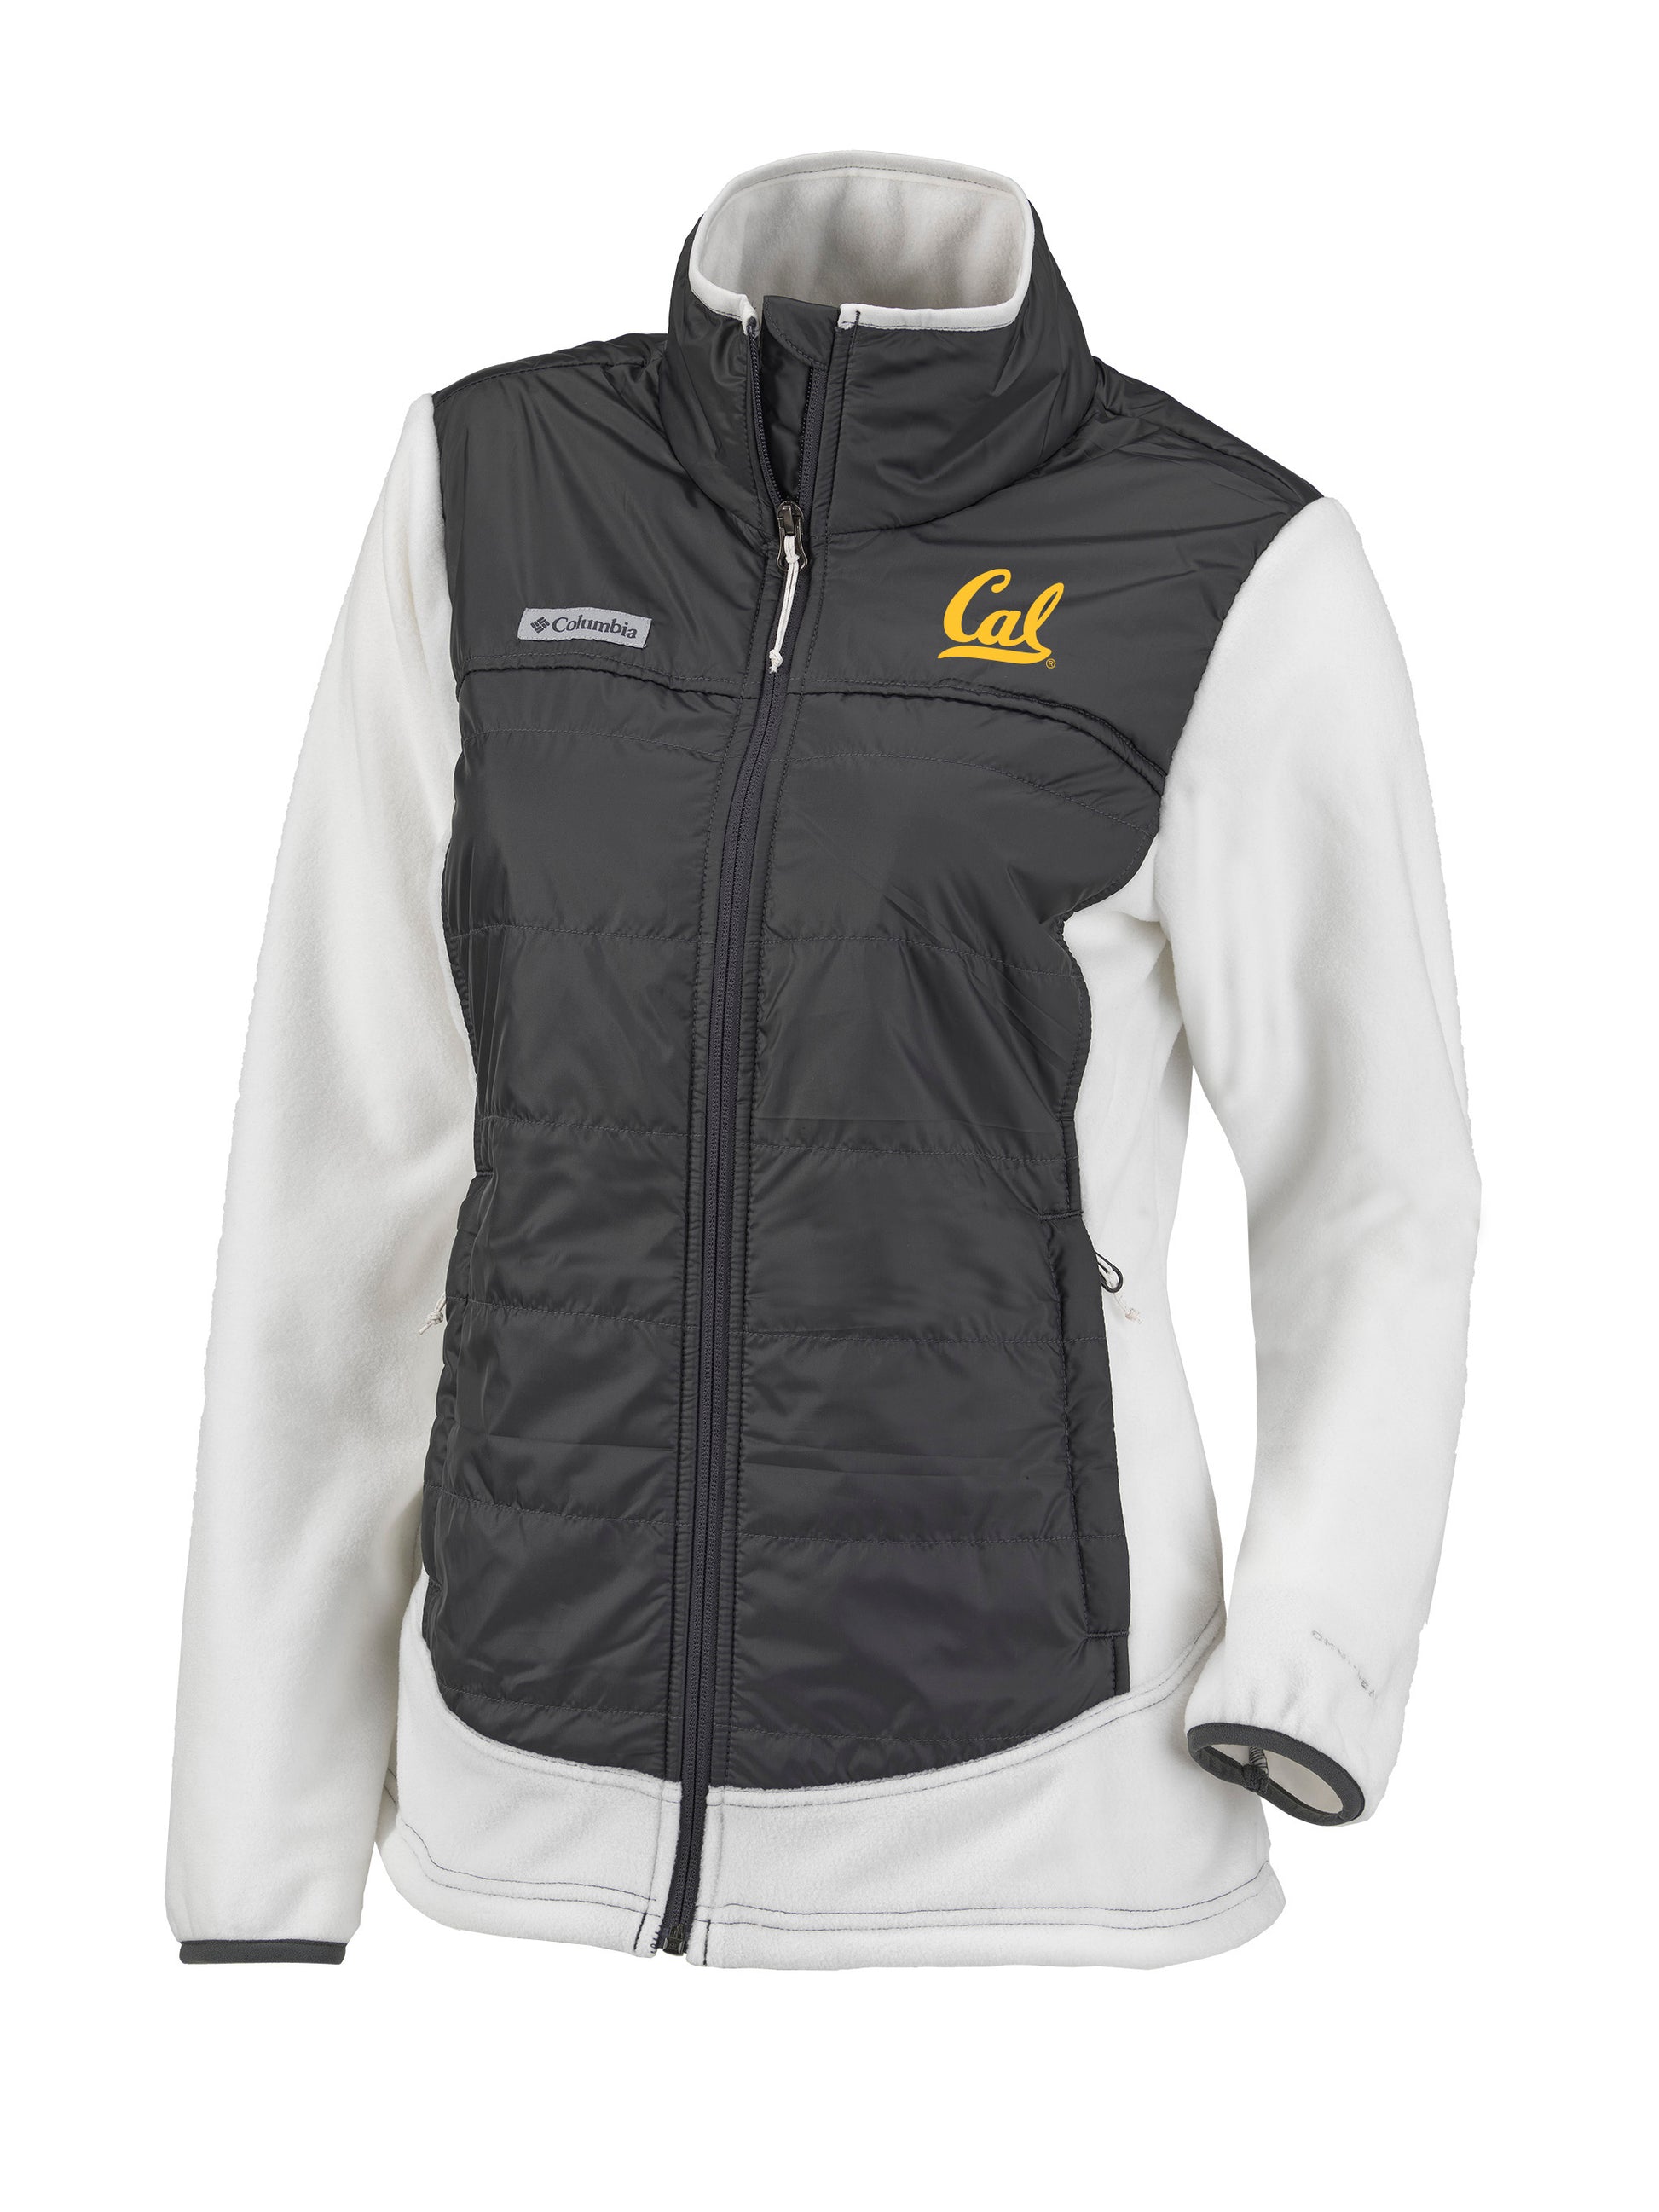 U.C. Berkeley Cal embroidered Columbia polar fleece combo women's jacket-Shop College Wear